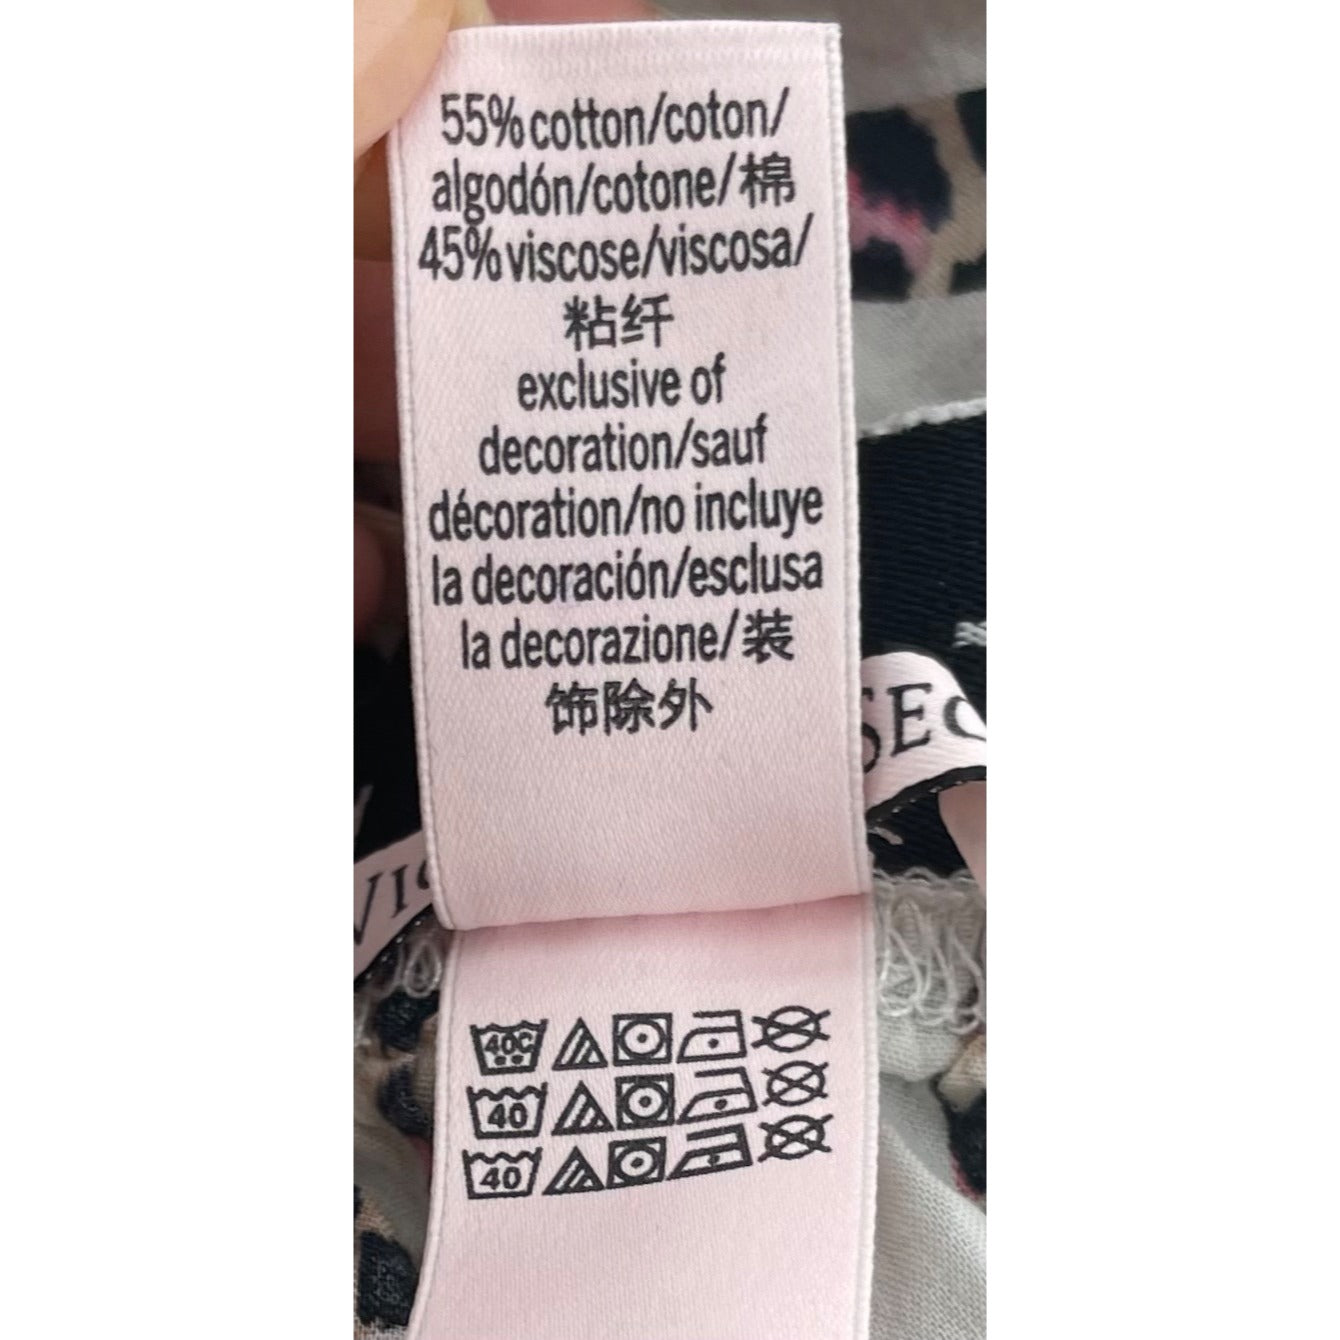 Victoria's Secret women's Size Small White/Pink/Tan Leopard Print/Lace Jammy Shorts